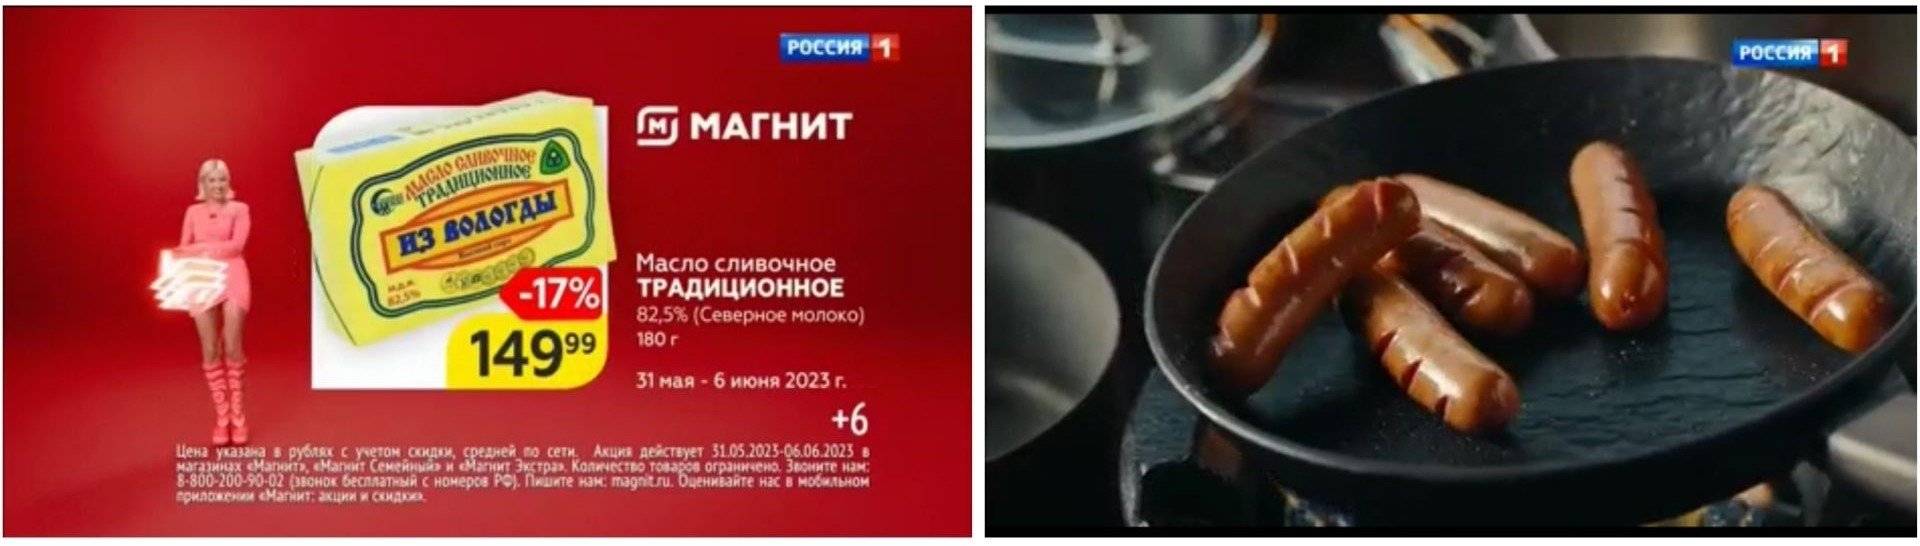 Rosyjska reklama masła i reklama kiełbasek